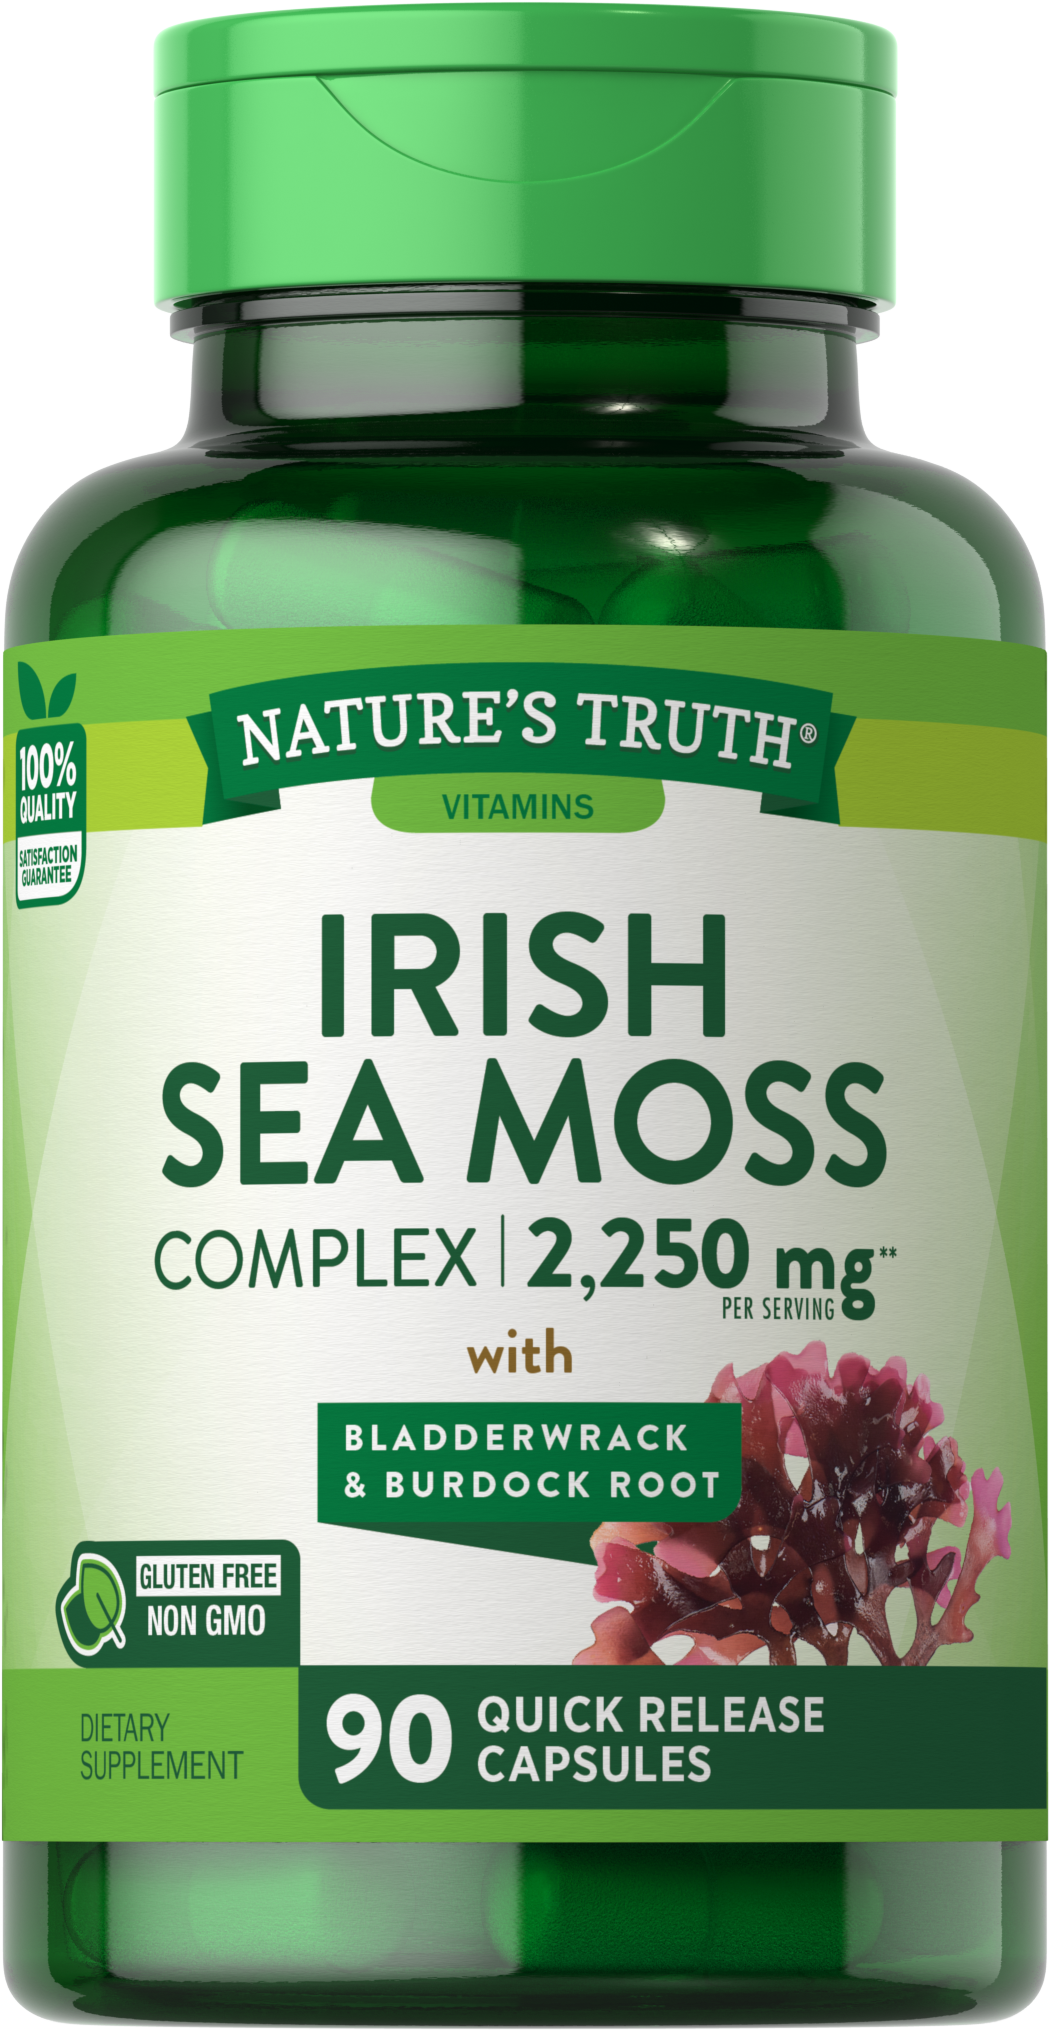 Irish Sea Moss Complex with Bladderwrack, Burdock Root